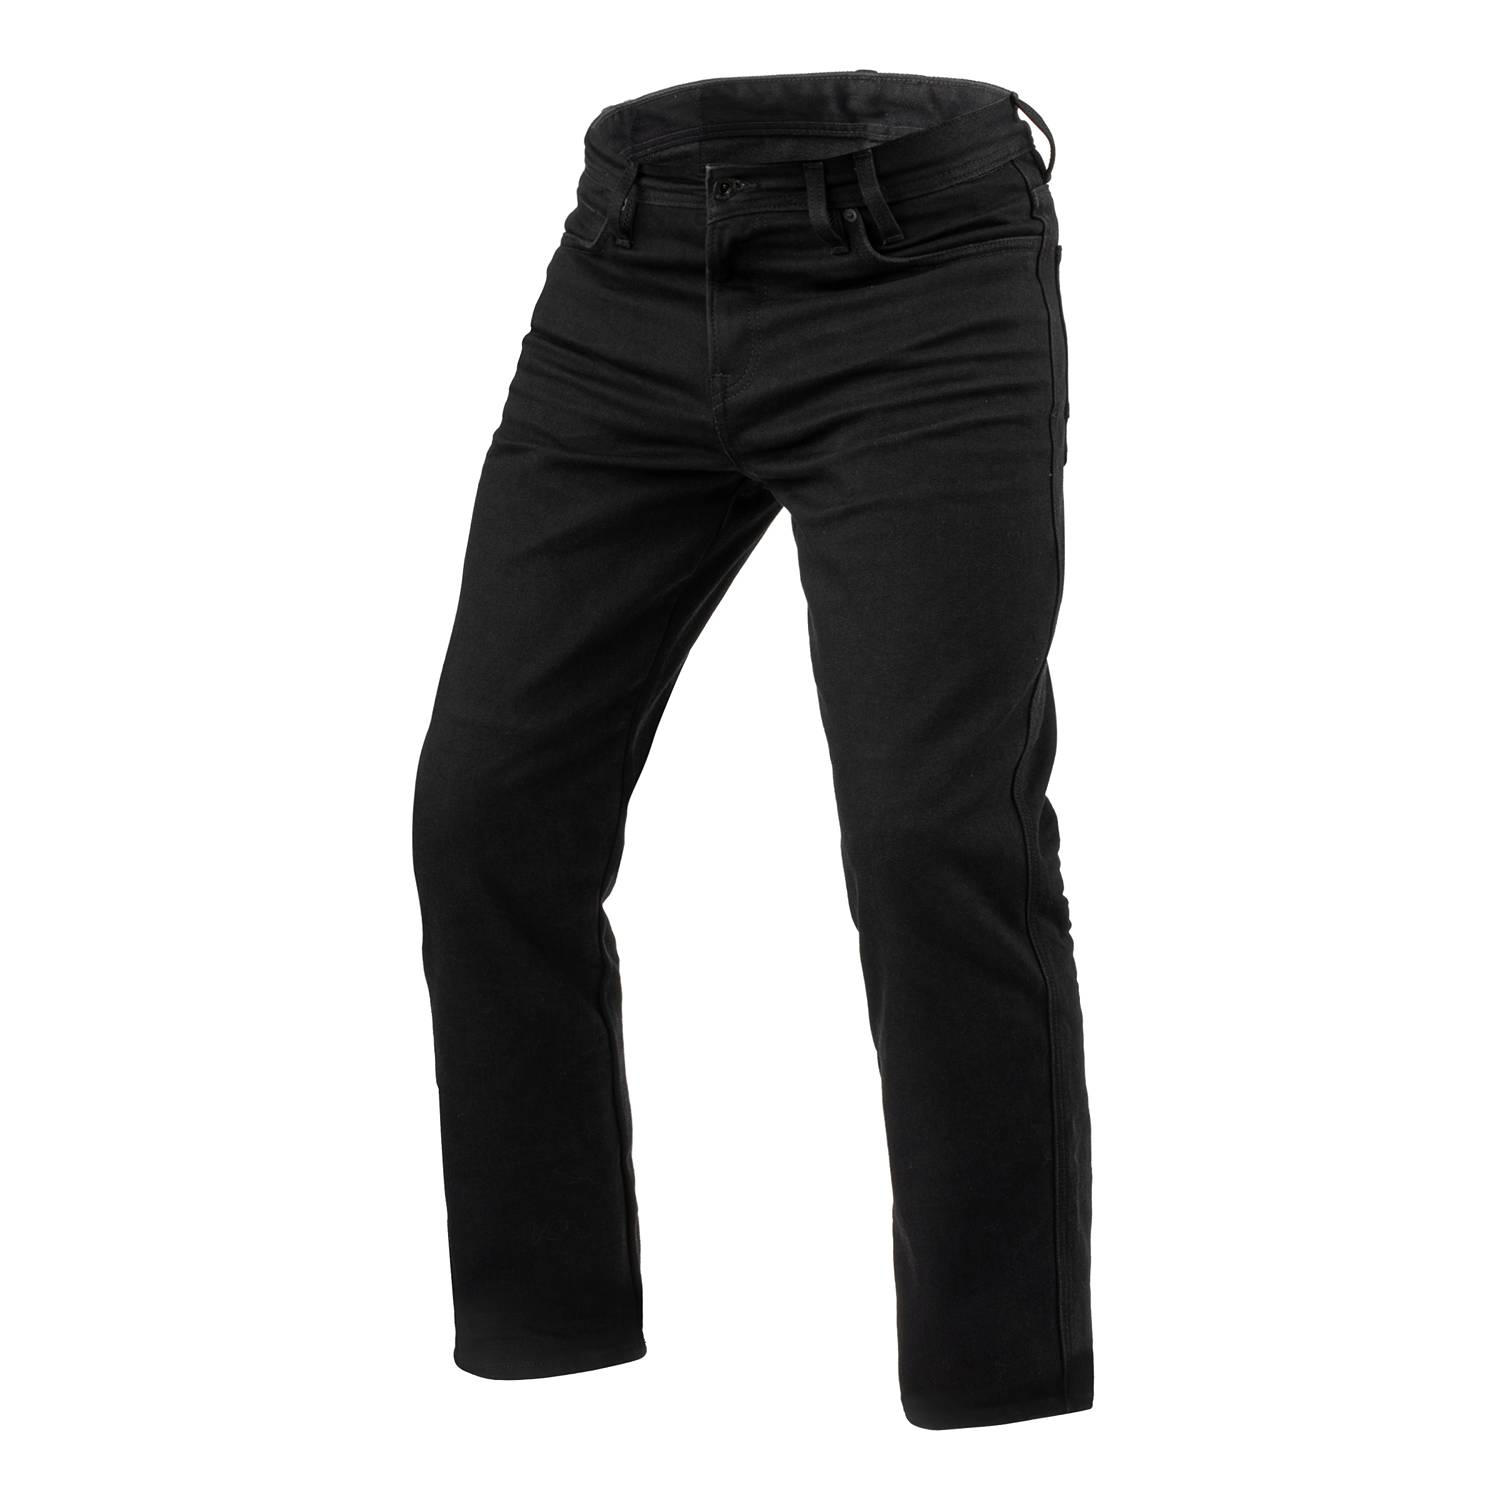 Image of REV'IT! Jeans Lombard 3 RF Black L34 Motorcycle Jeans Talla L34/W28